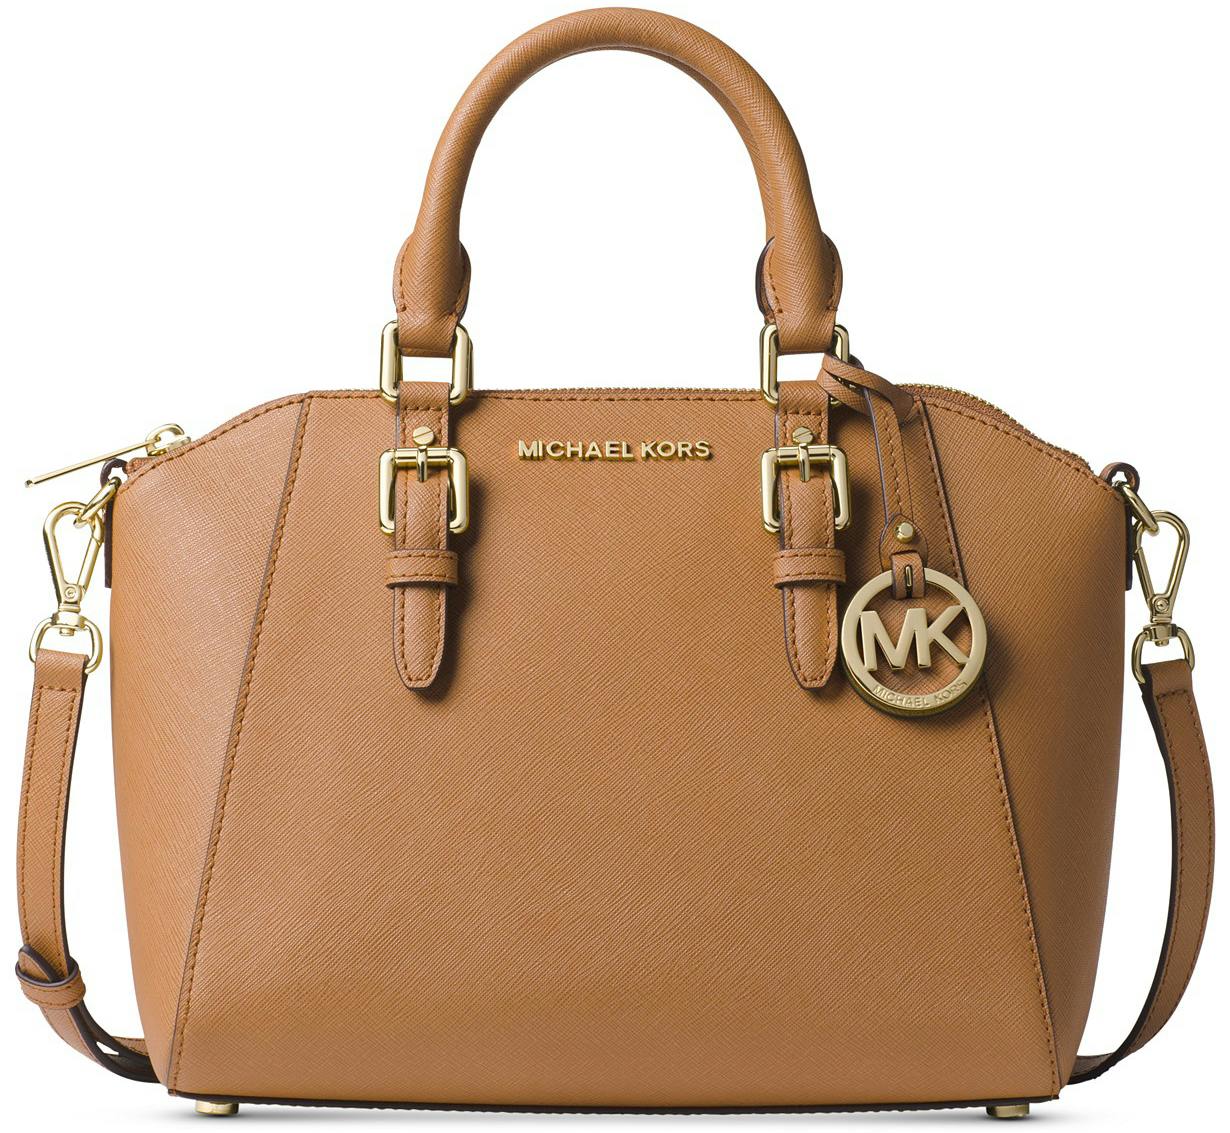 Buy Michael Kors Handbags At Macy's On Sale | UP TO 58% OFF